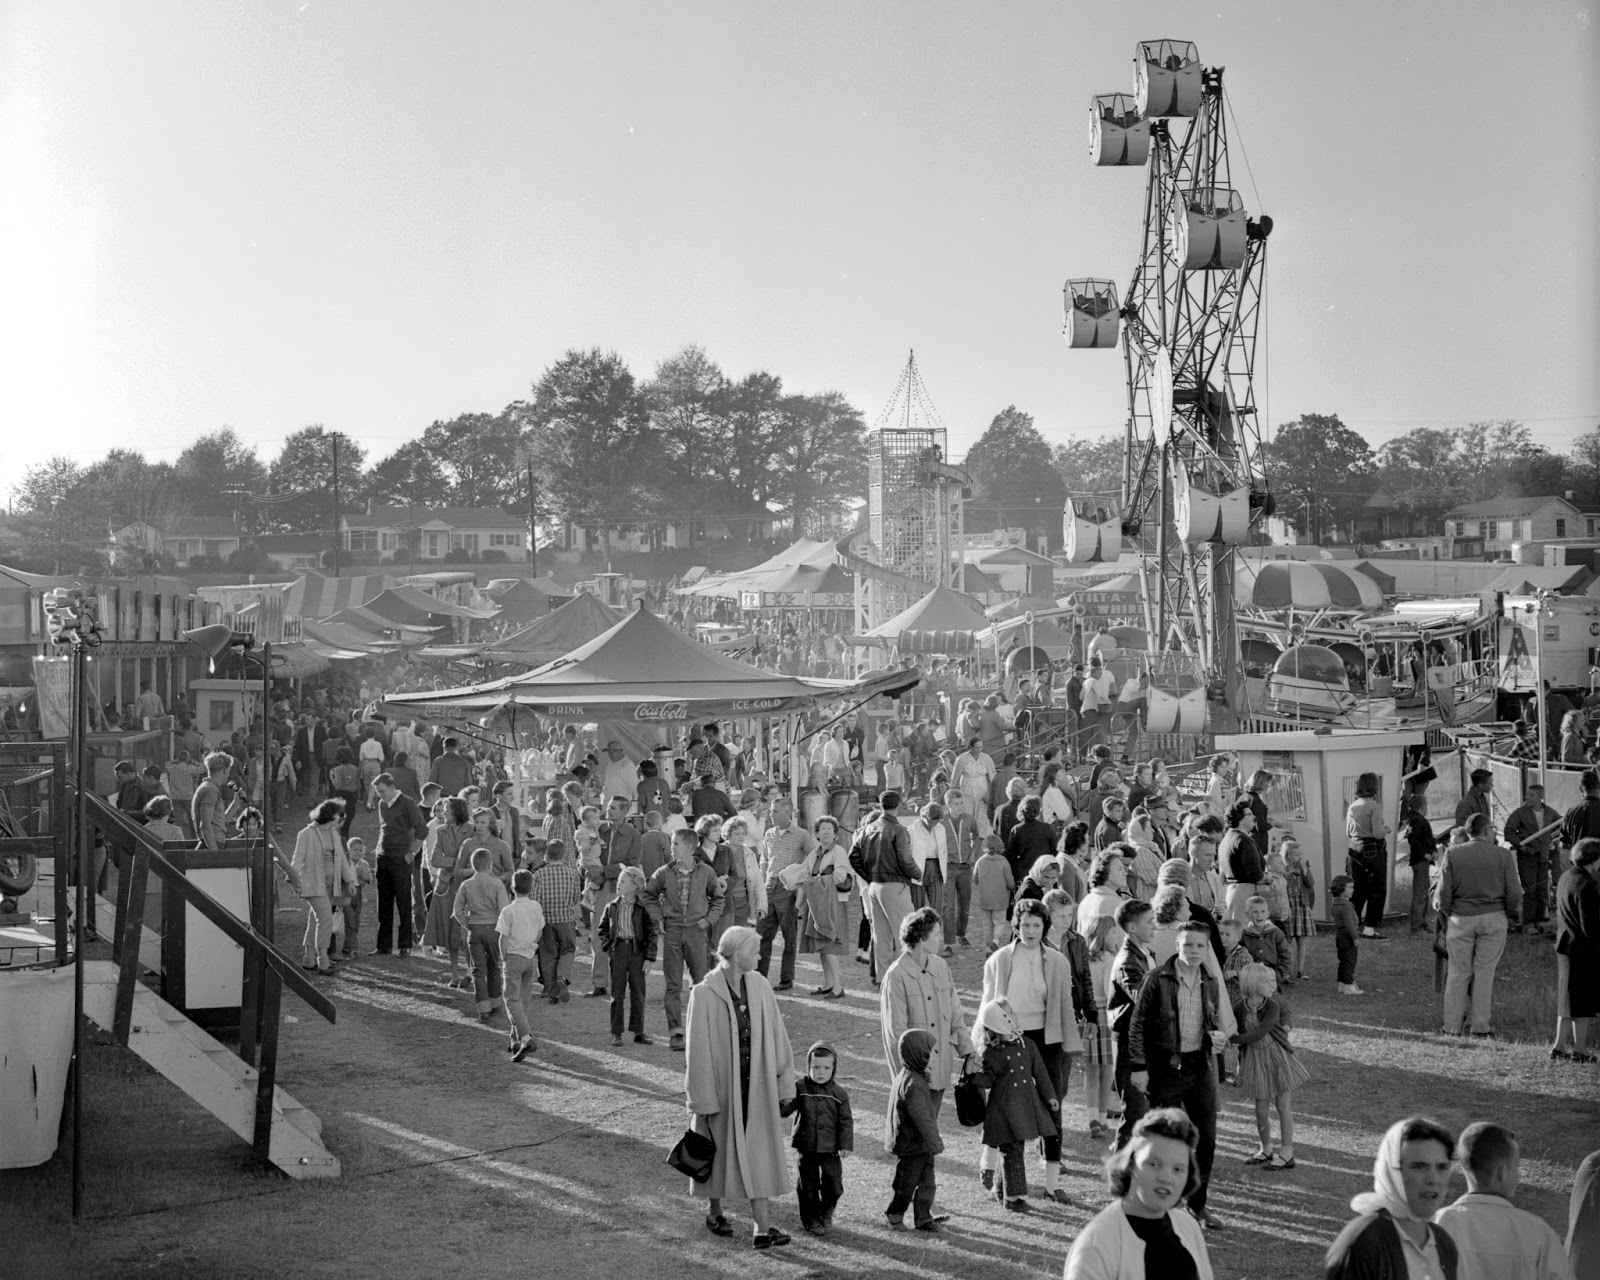 THE LANCASTER ARCHIVE county fair